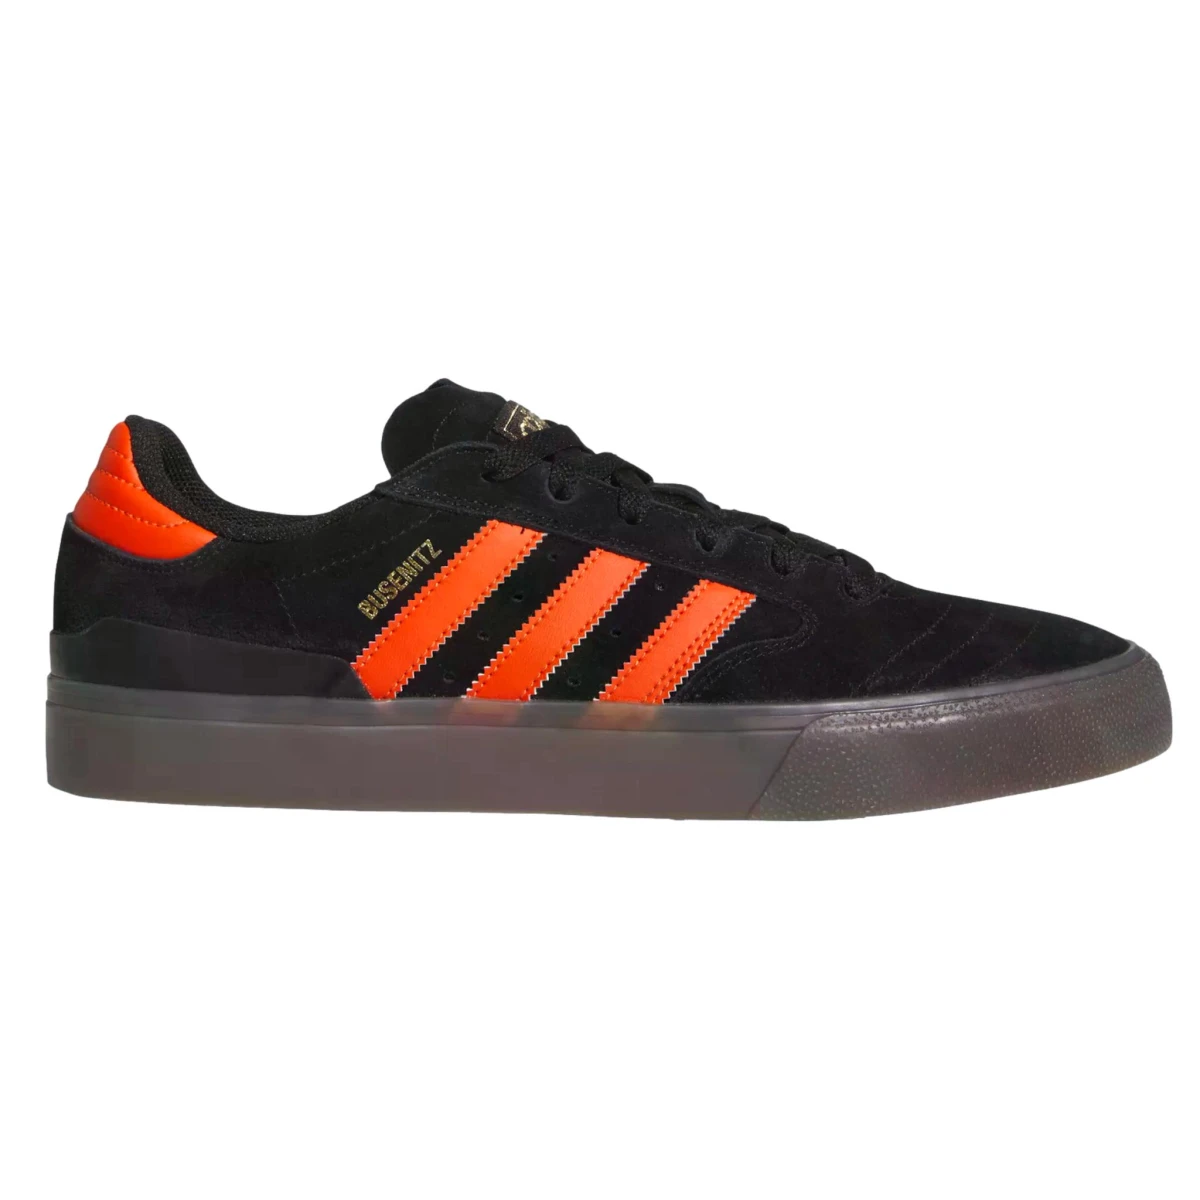 Adidas Busenitz vulc II shoes black orange gum